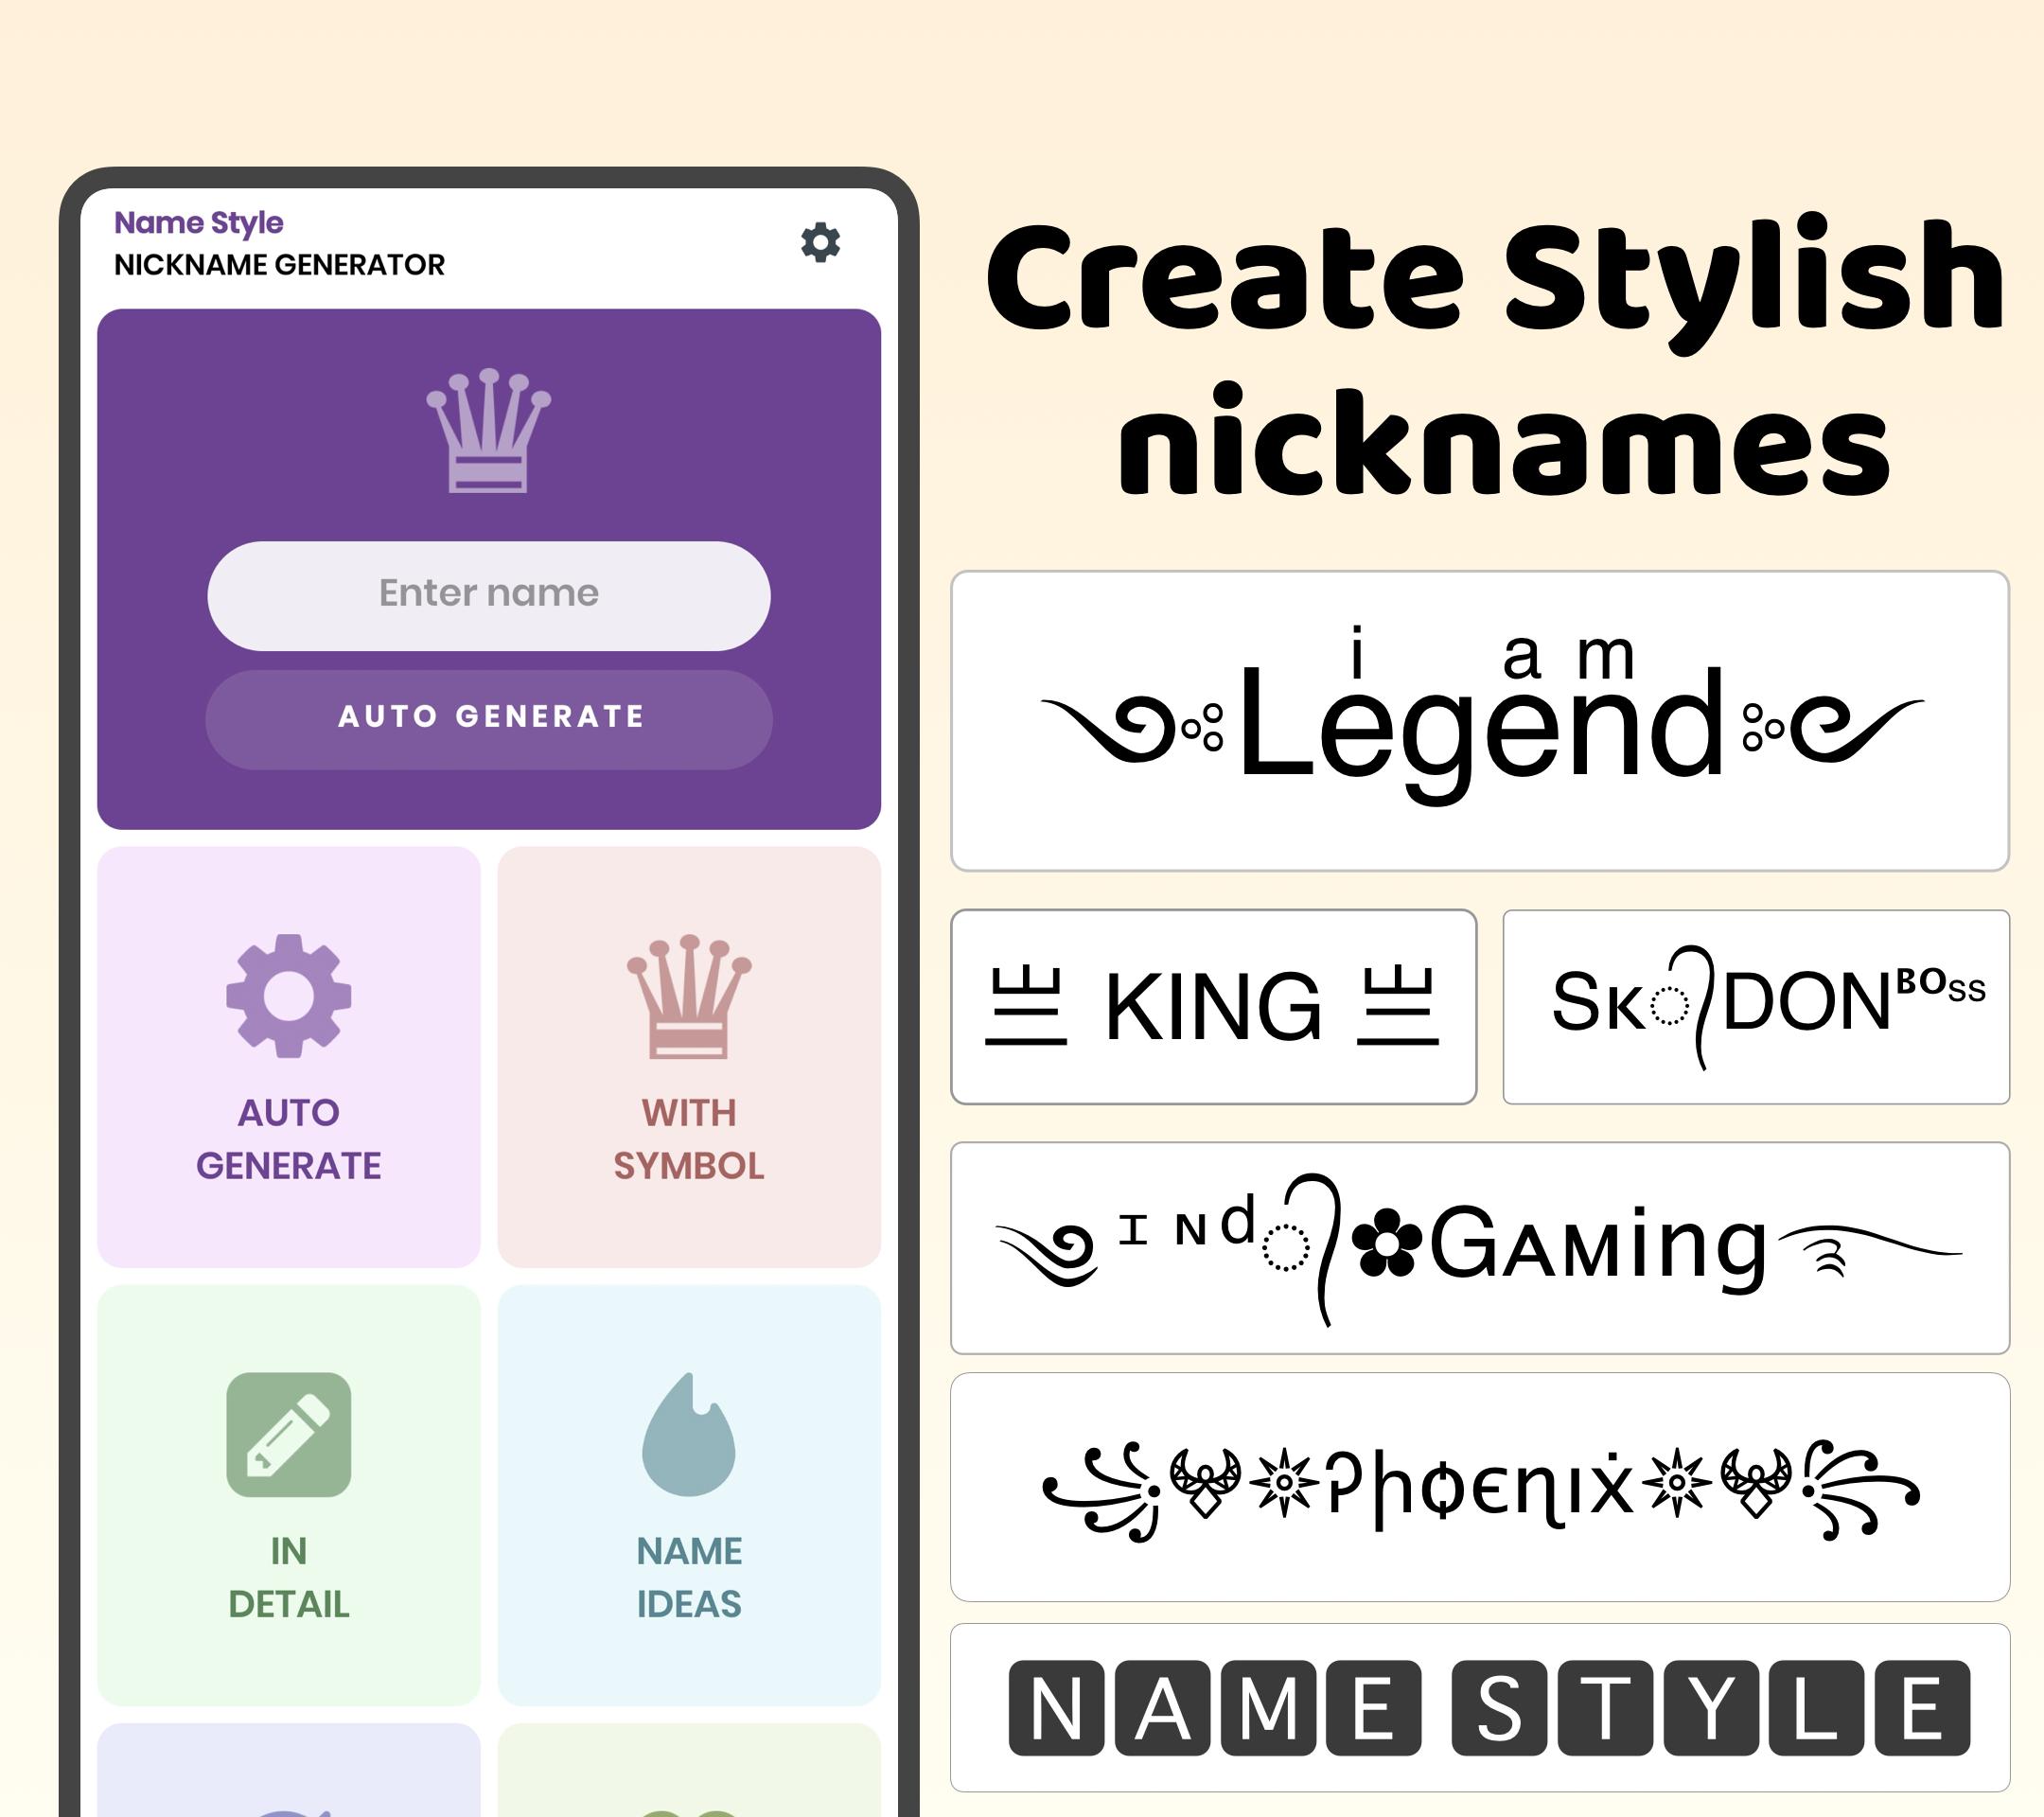 Name Style. Nickname Generator. Generations names. Create stylish nickname. Стиль никнейм